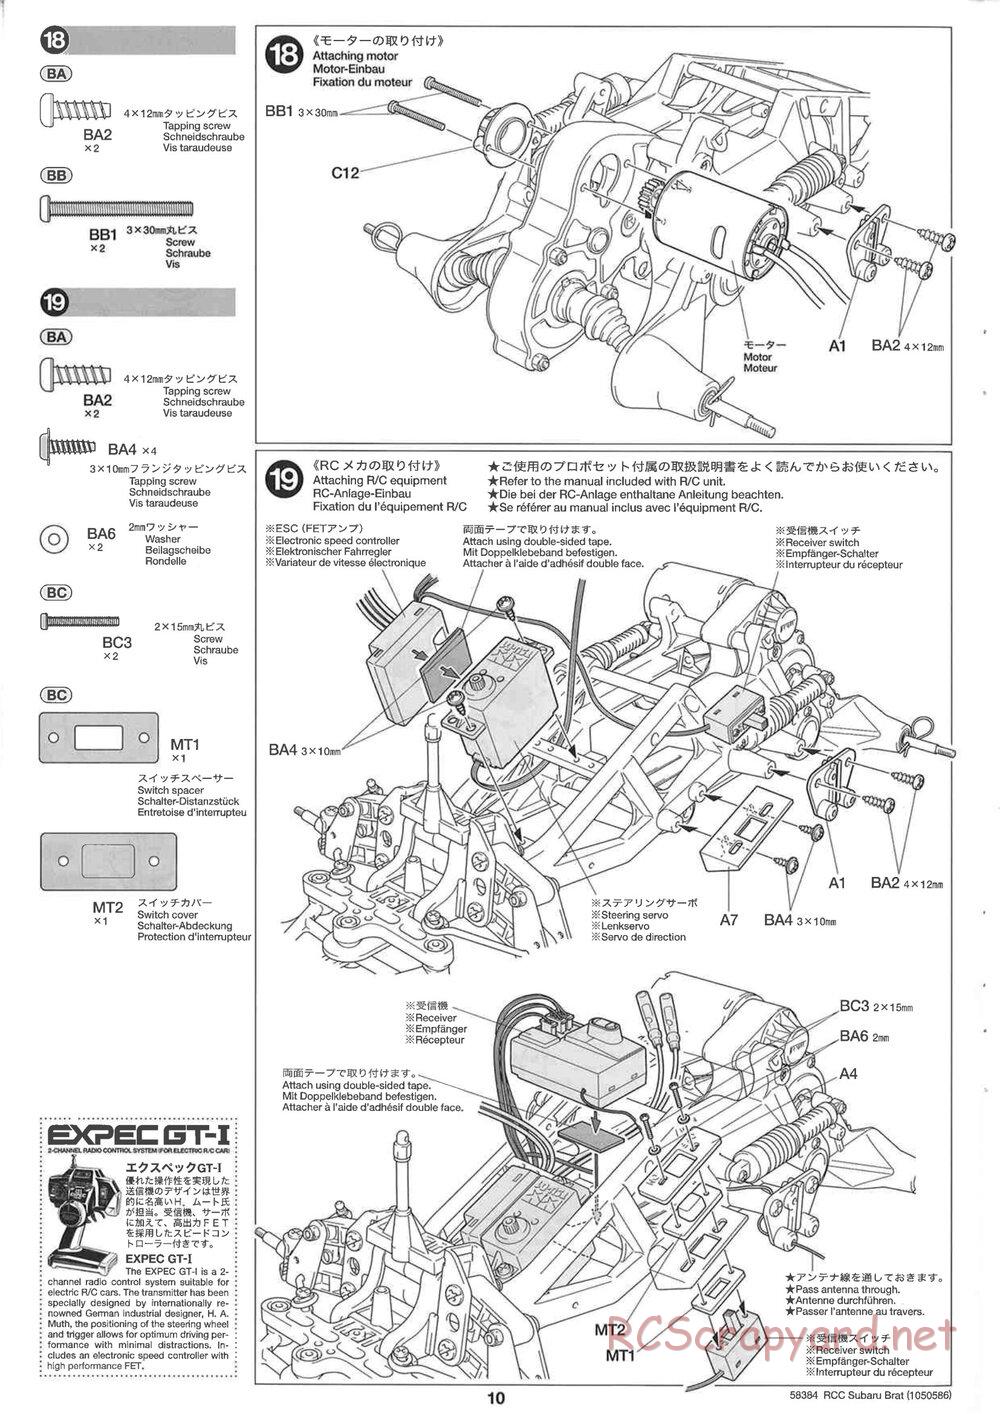 Tamiya - Subaru Brat 2007 - ORV Chassis - Manual - Page 10